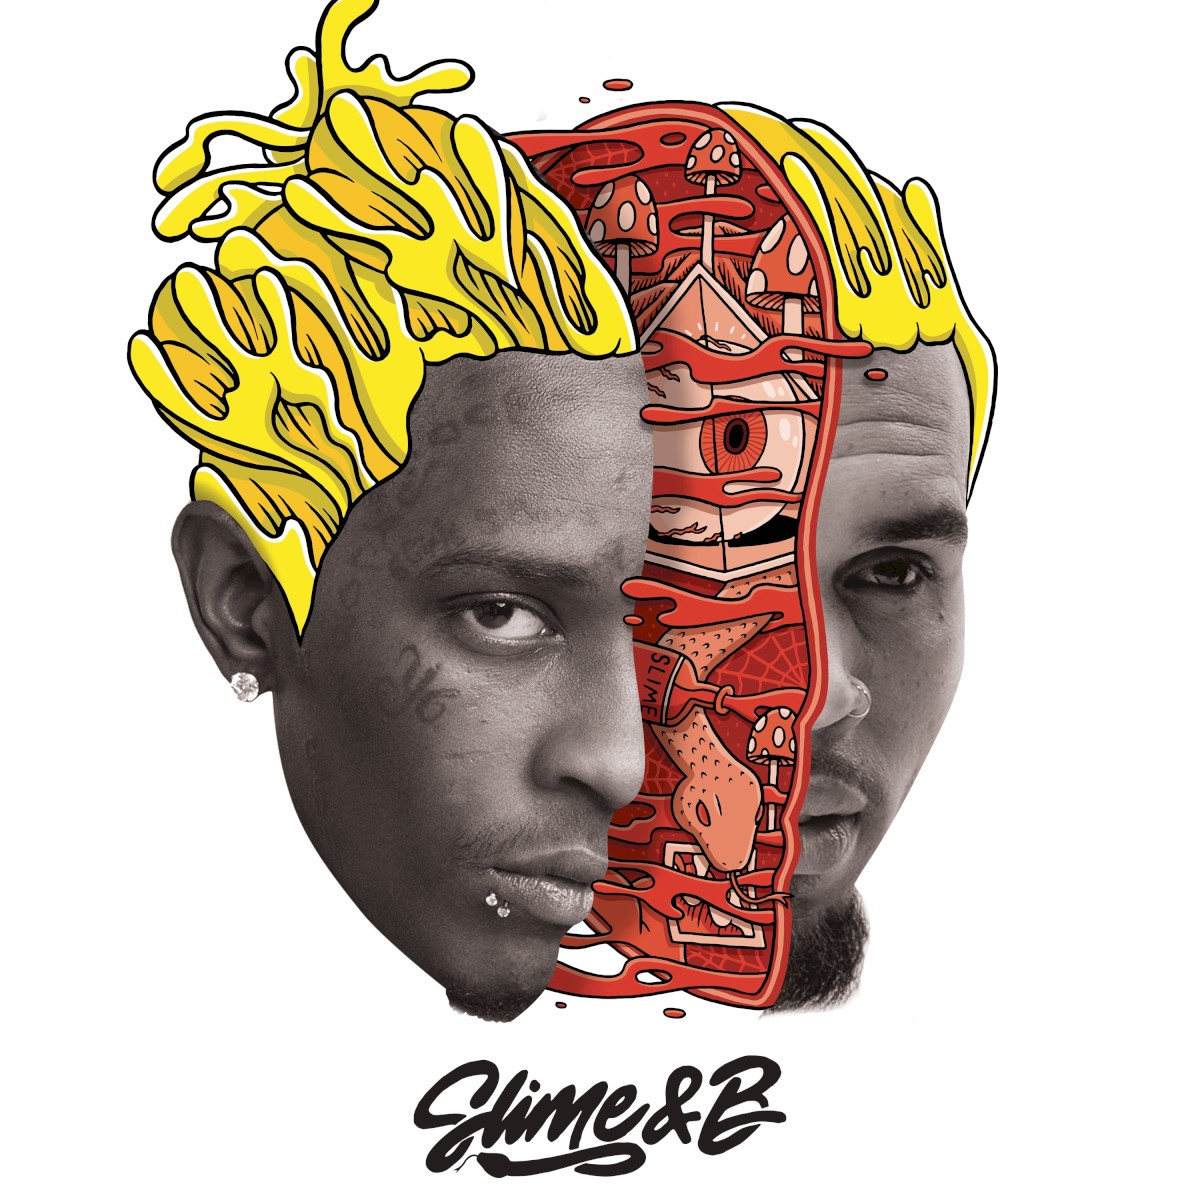 Chris Brown & Young Thug — Stolen cover artwork